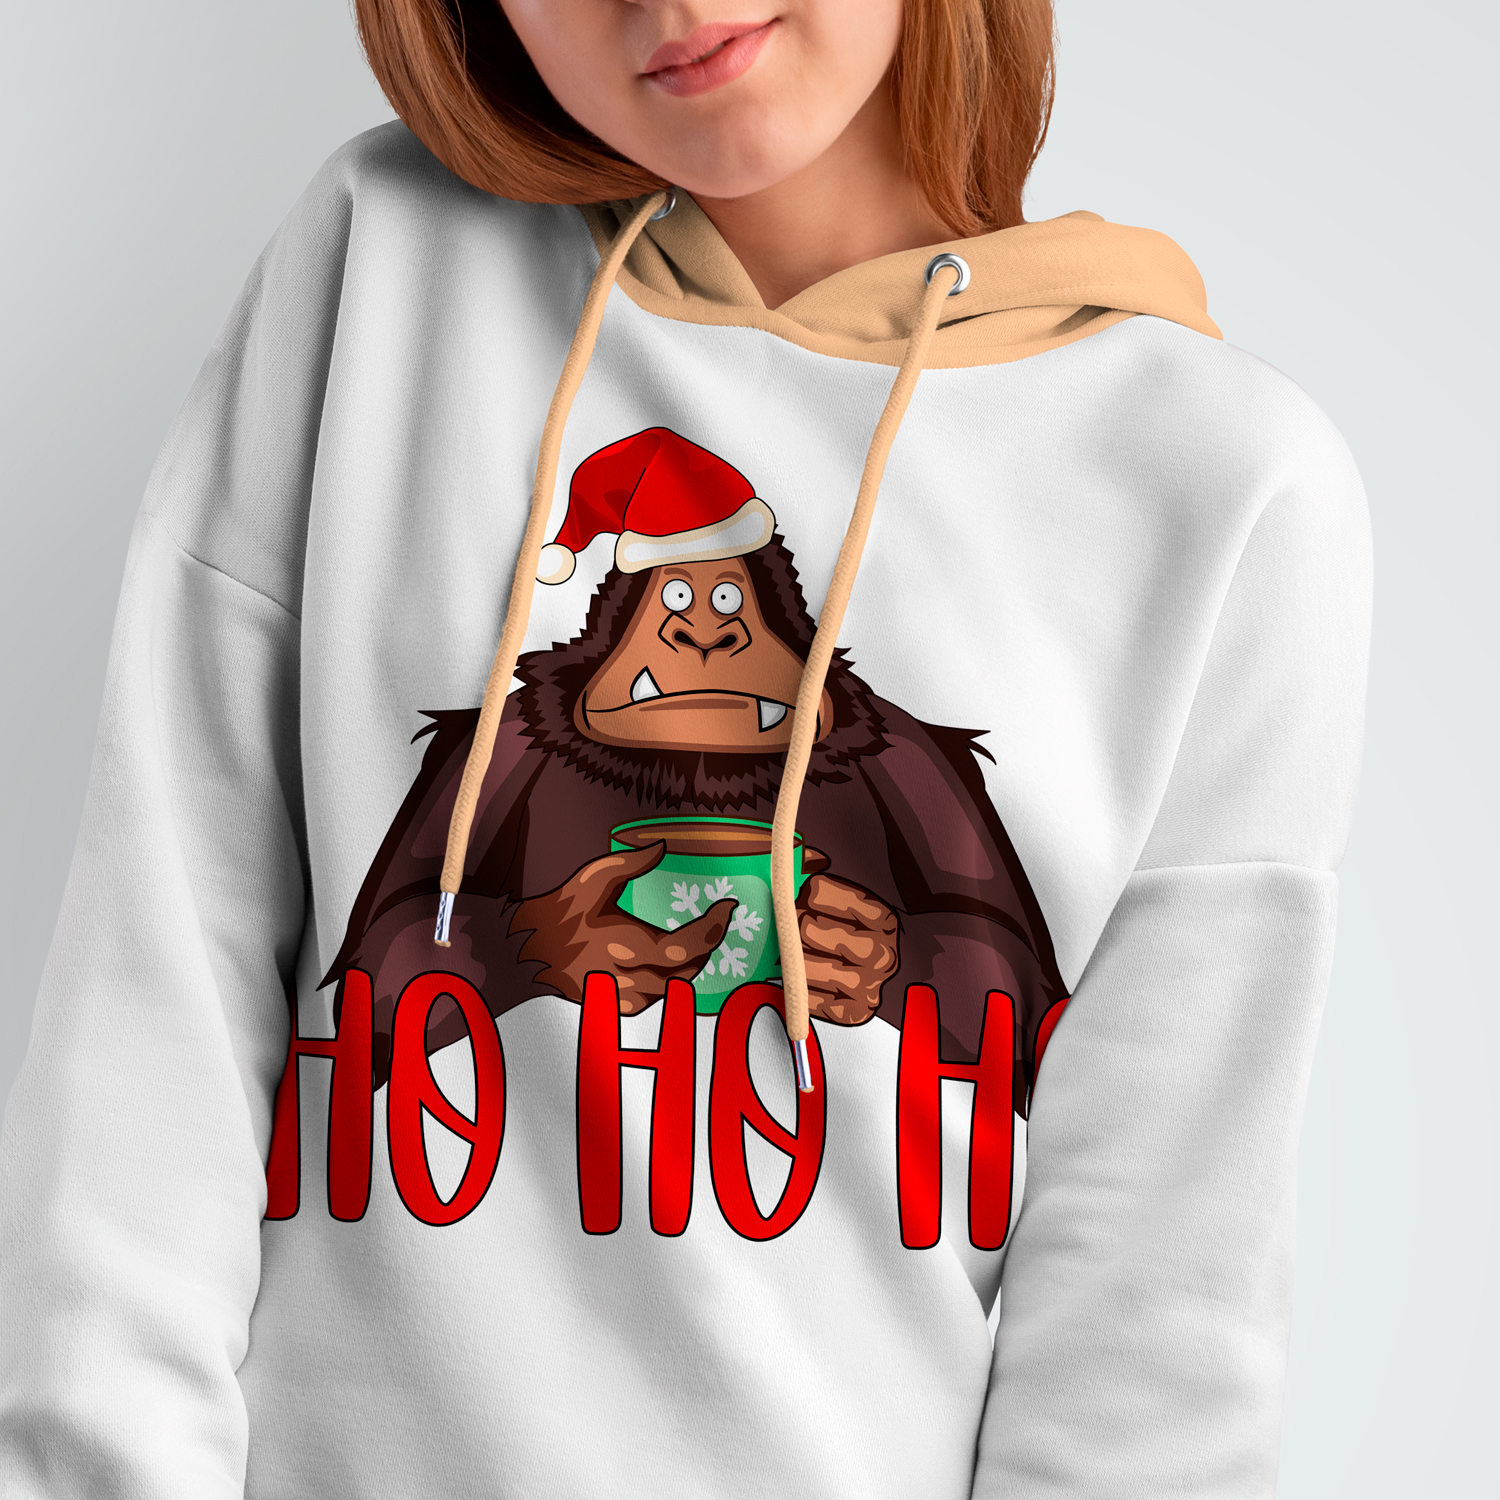 Woman wearing a sweatshirt with a christmas monkey on it.